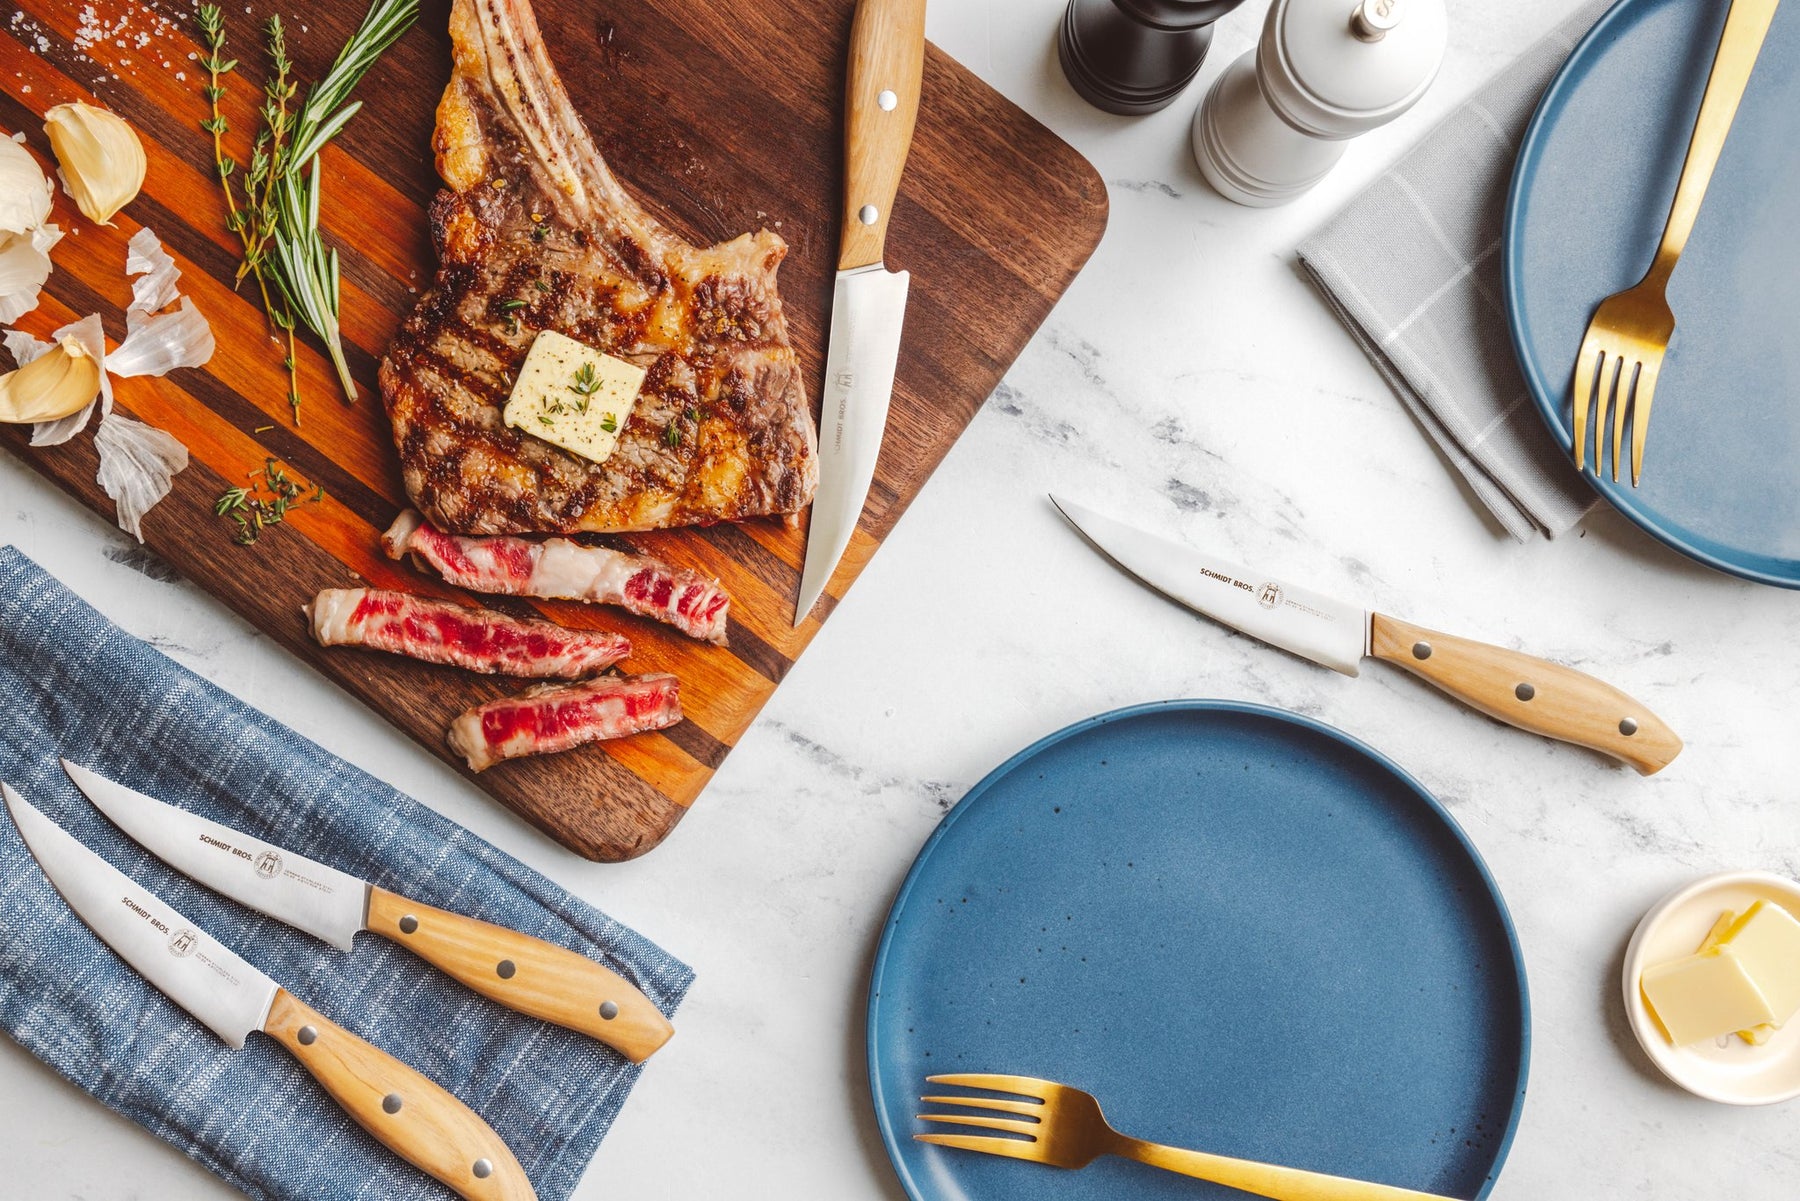 Schmidt Brothers® Cutlery 14-Piece Elite Series Knife Block Set with Honing  Rod and Steak Knives; 100% Premium German Stainless Steel;